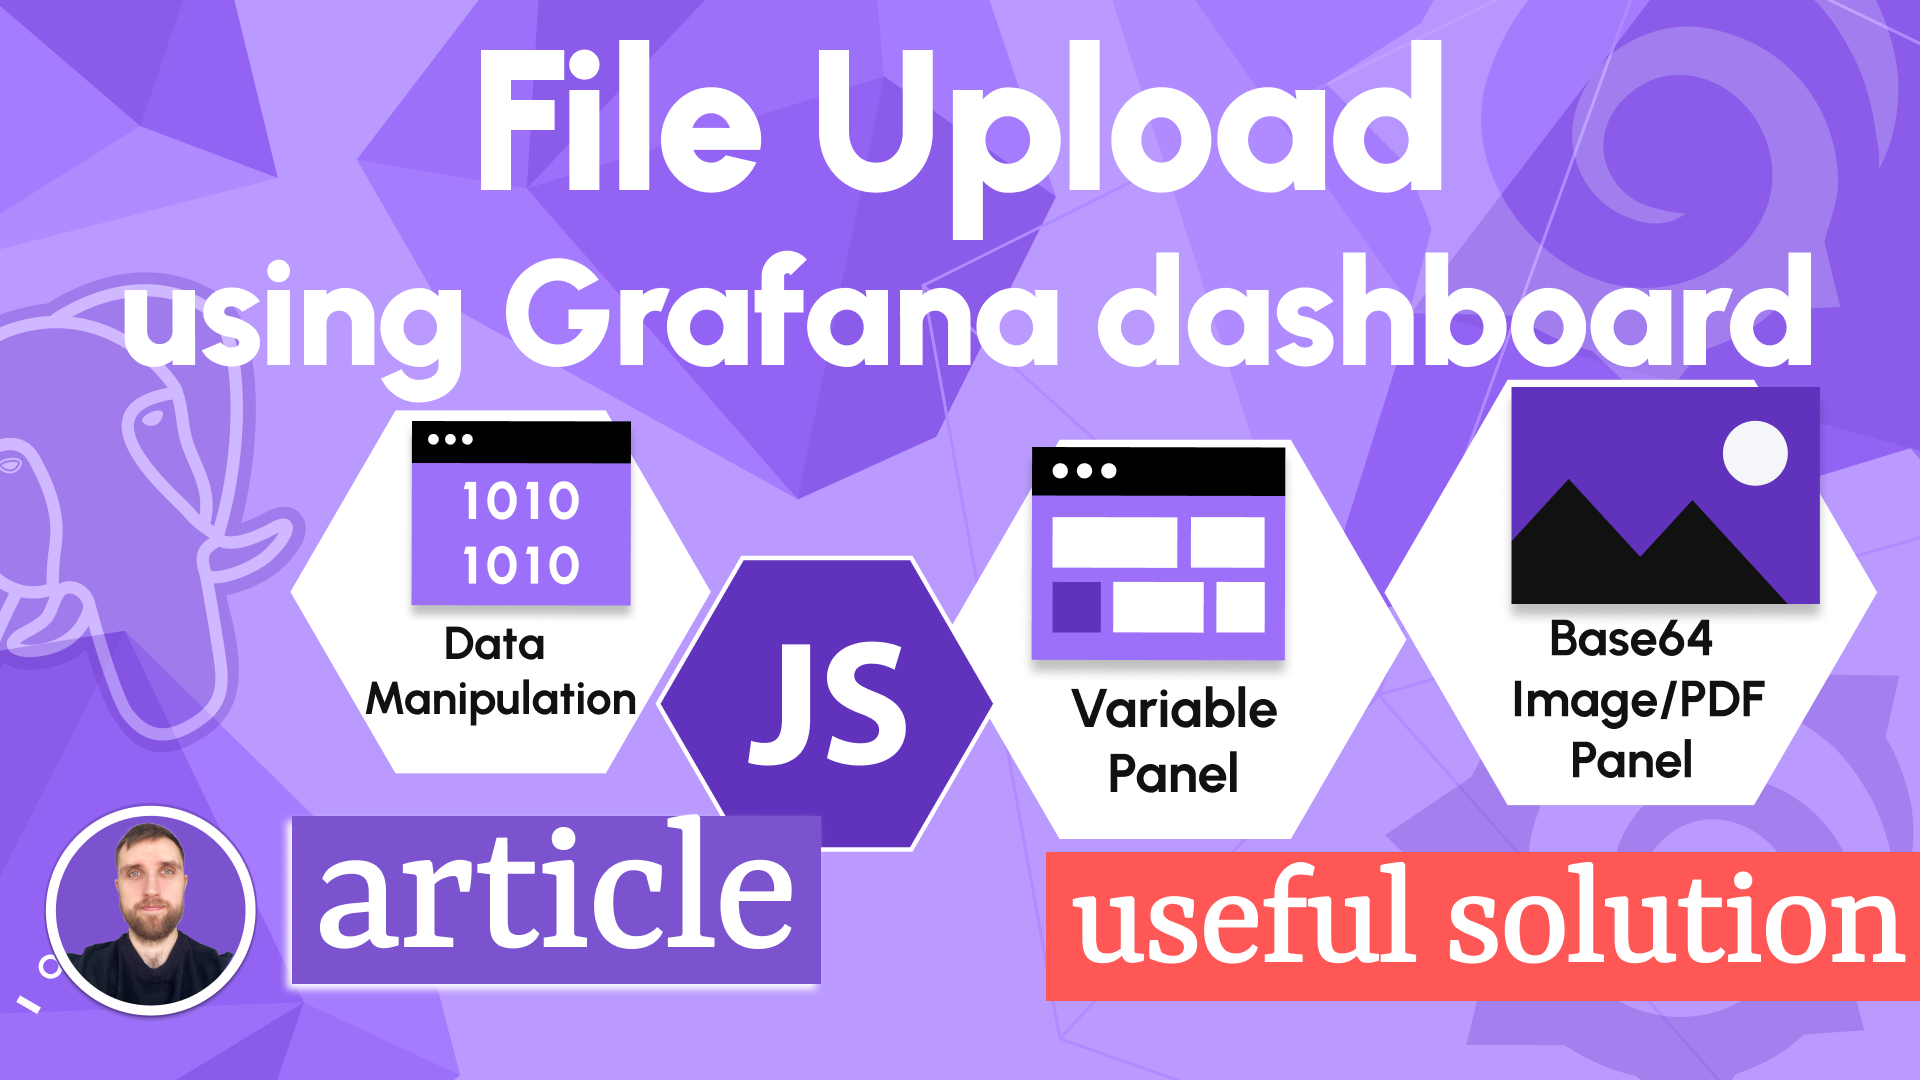 File upload using the Grafana dashboard